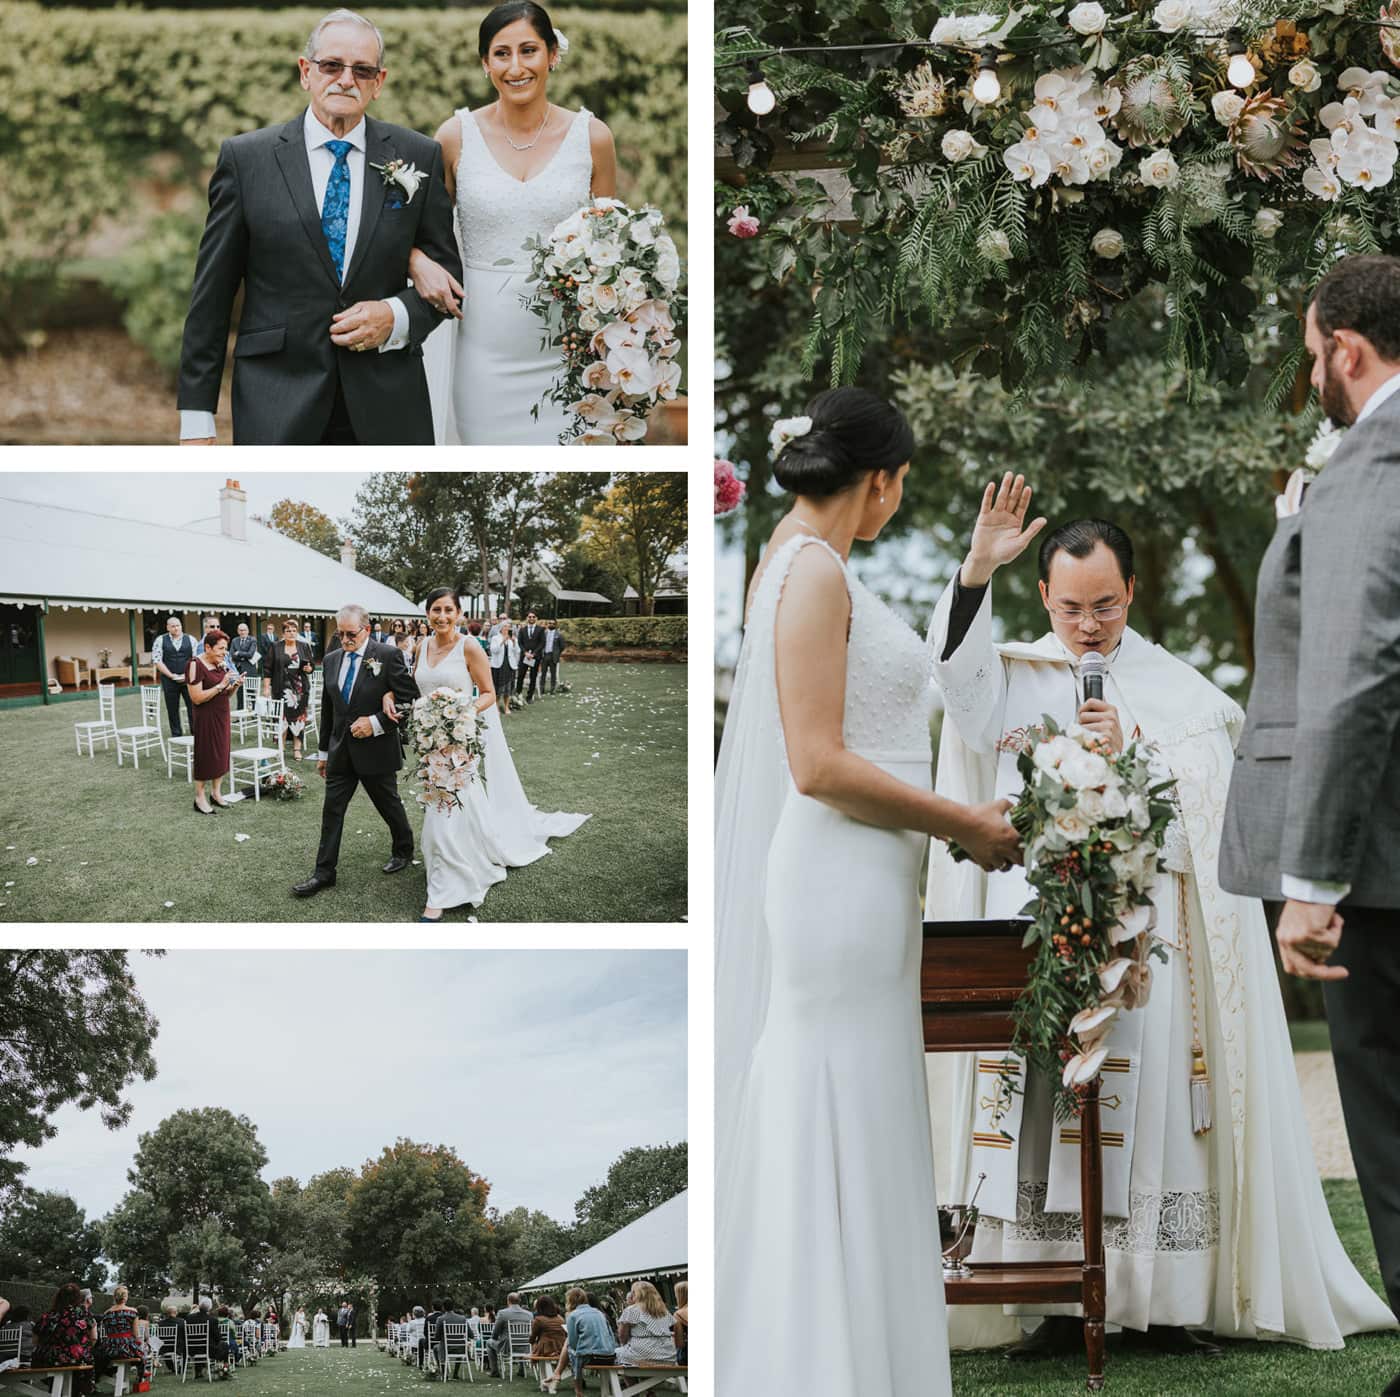 Garden Wedding Ceremony at Flowerdale Estate - Wedding photography by freshphotography